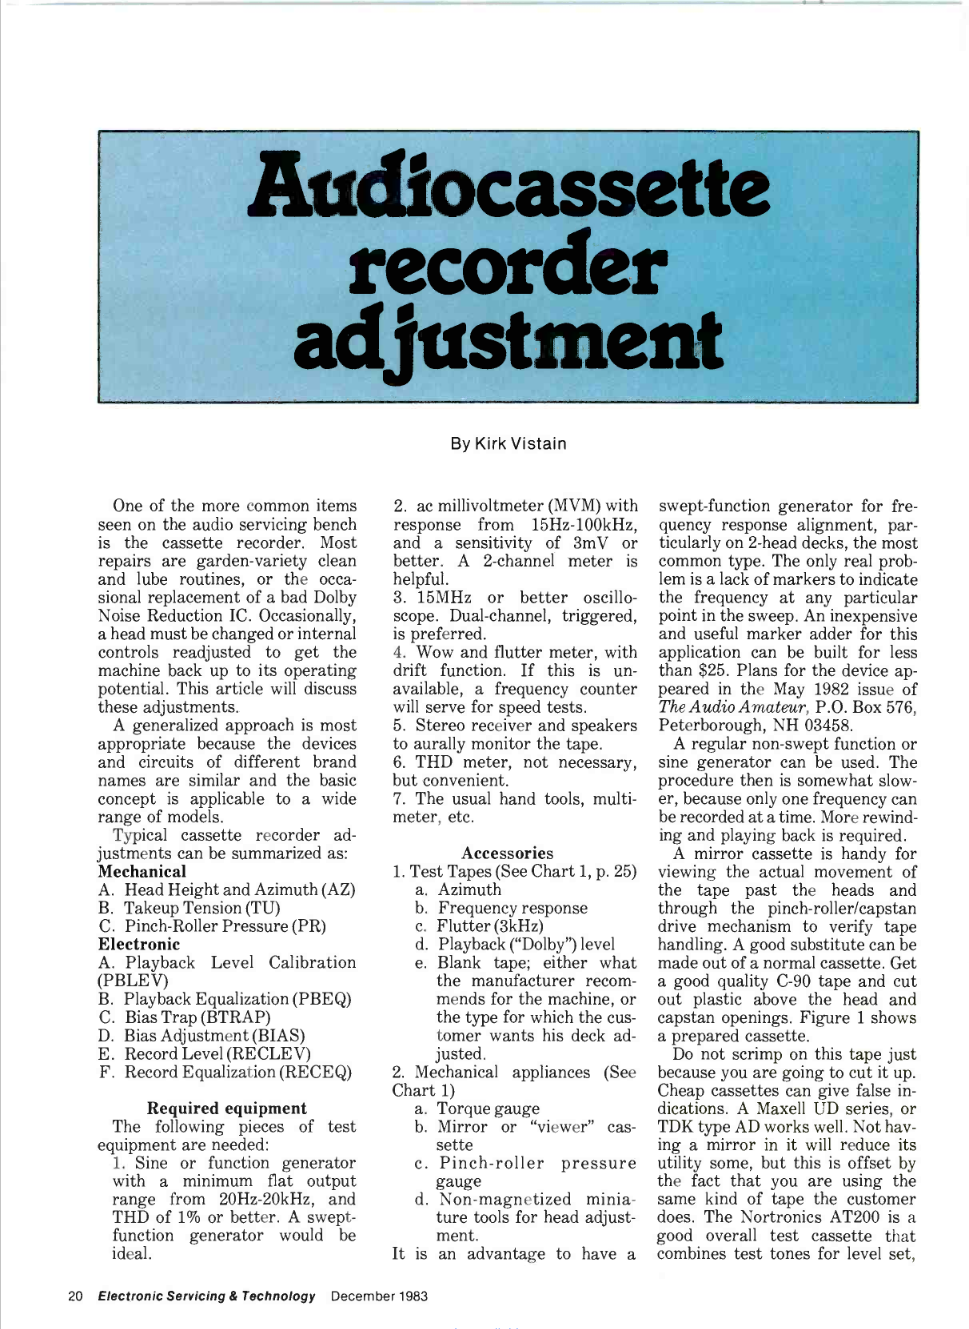 Audiocassette Recorder Adjustments 1983 1.png